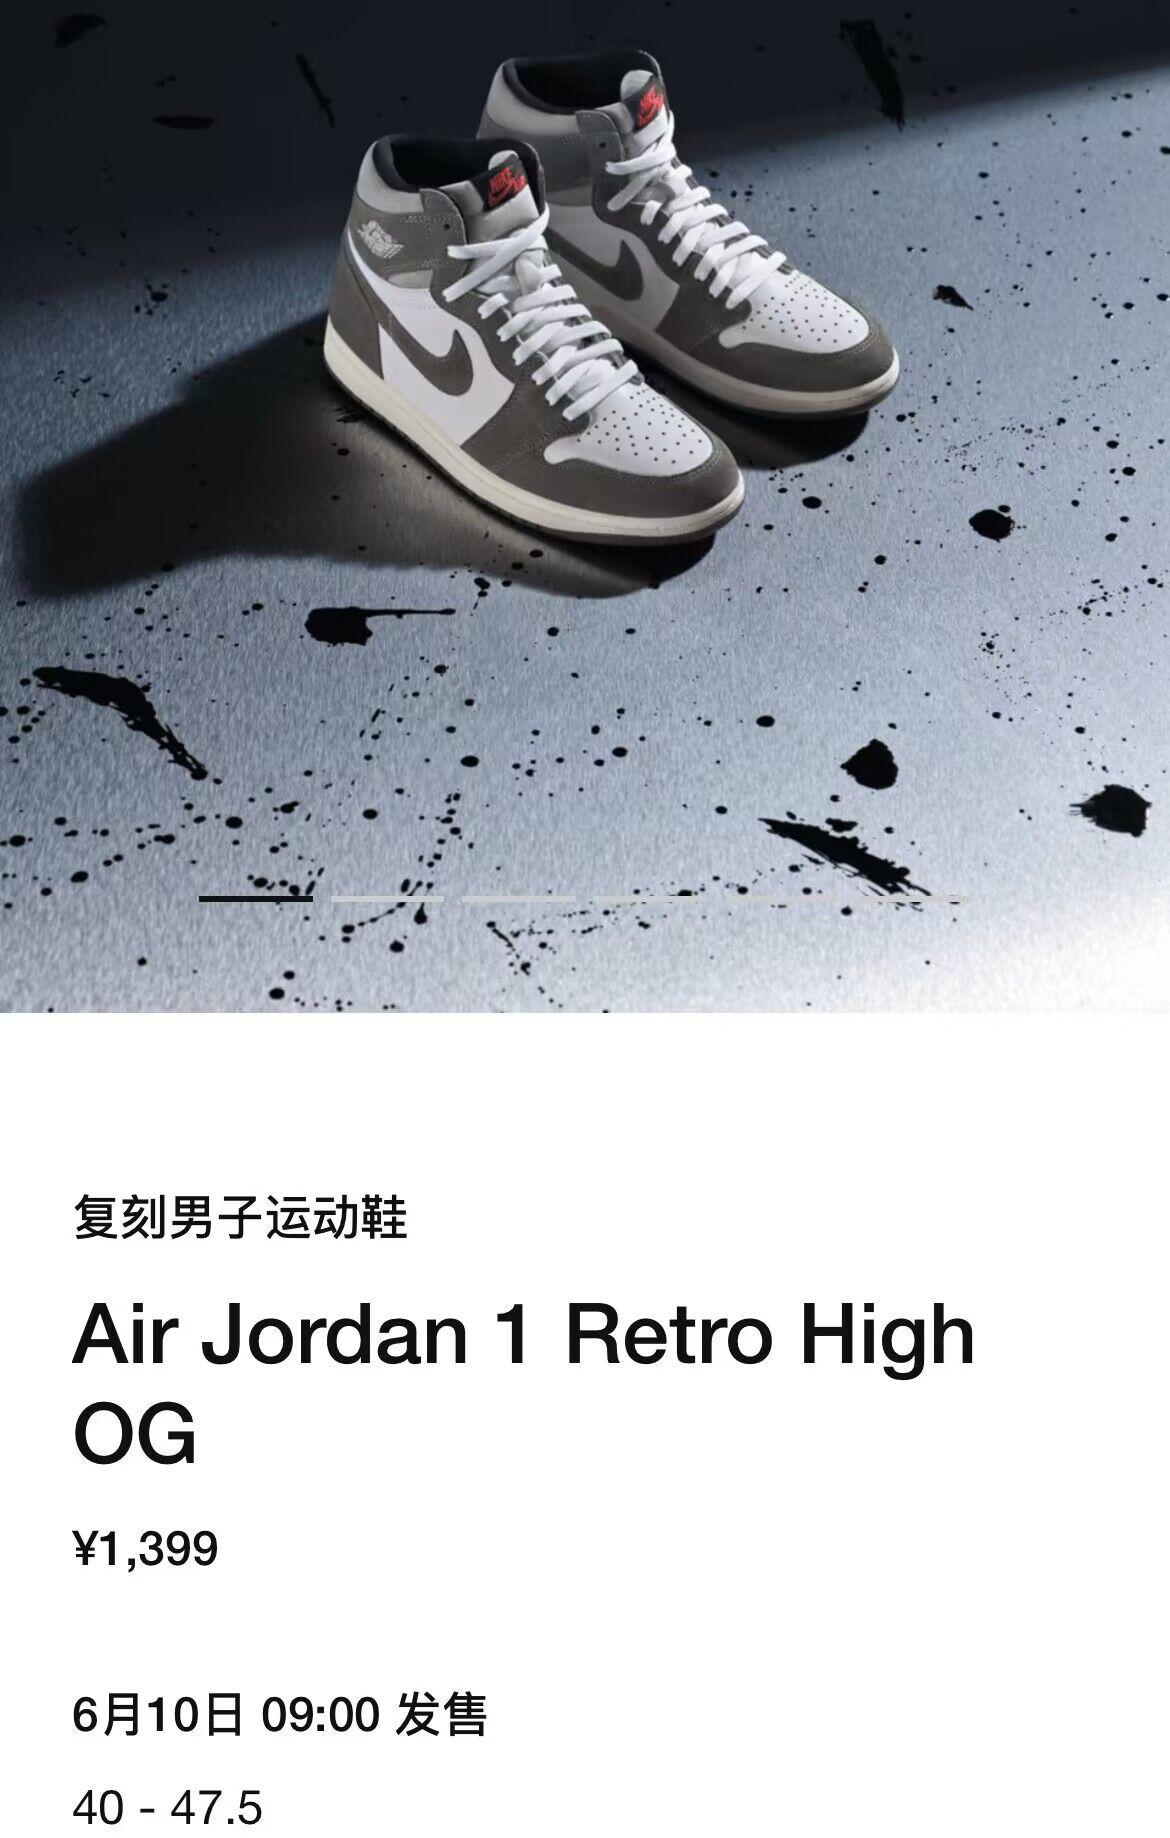 Nike,Air Jordan,Salomon  周末发售提醒！市价 2k 的「重磅联名」开始登记！速冲！